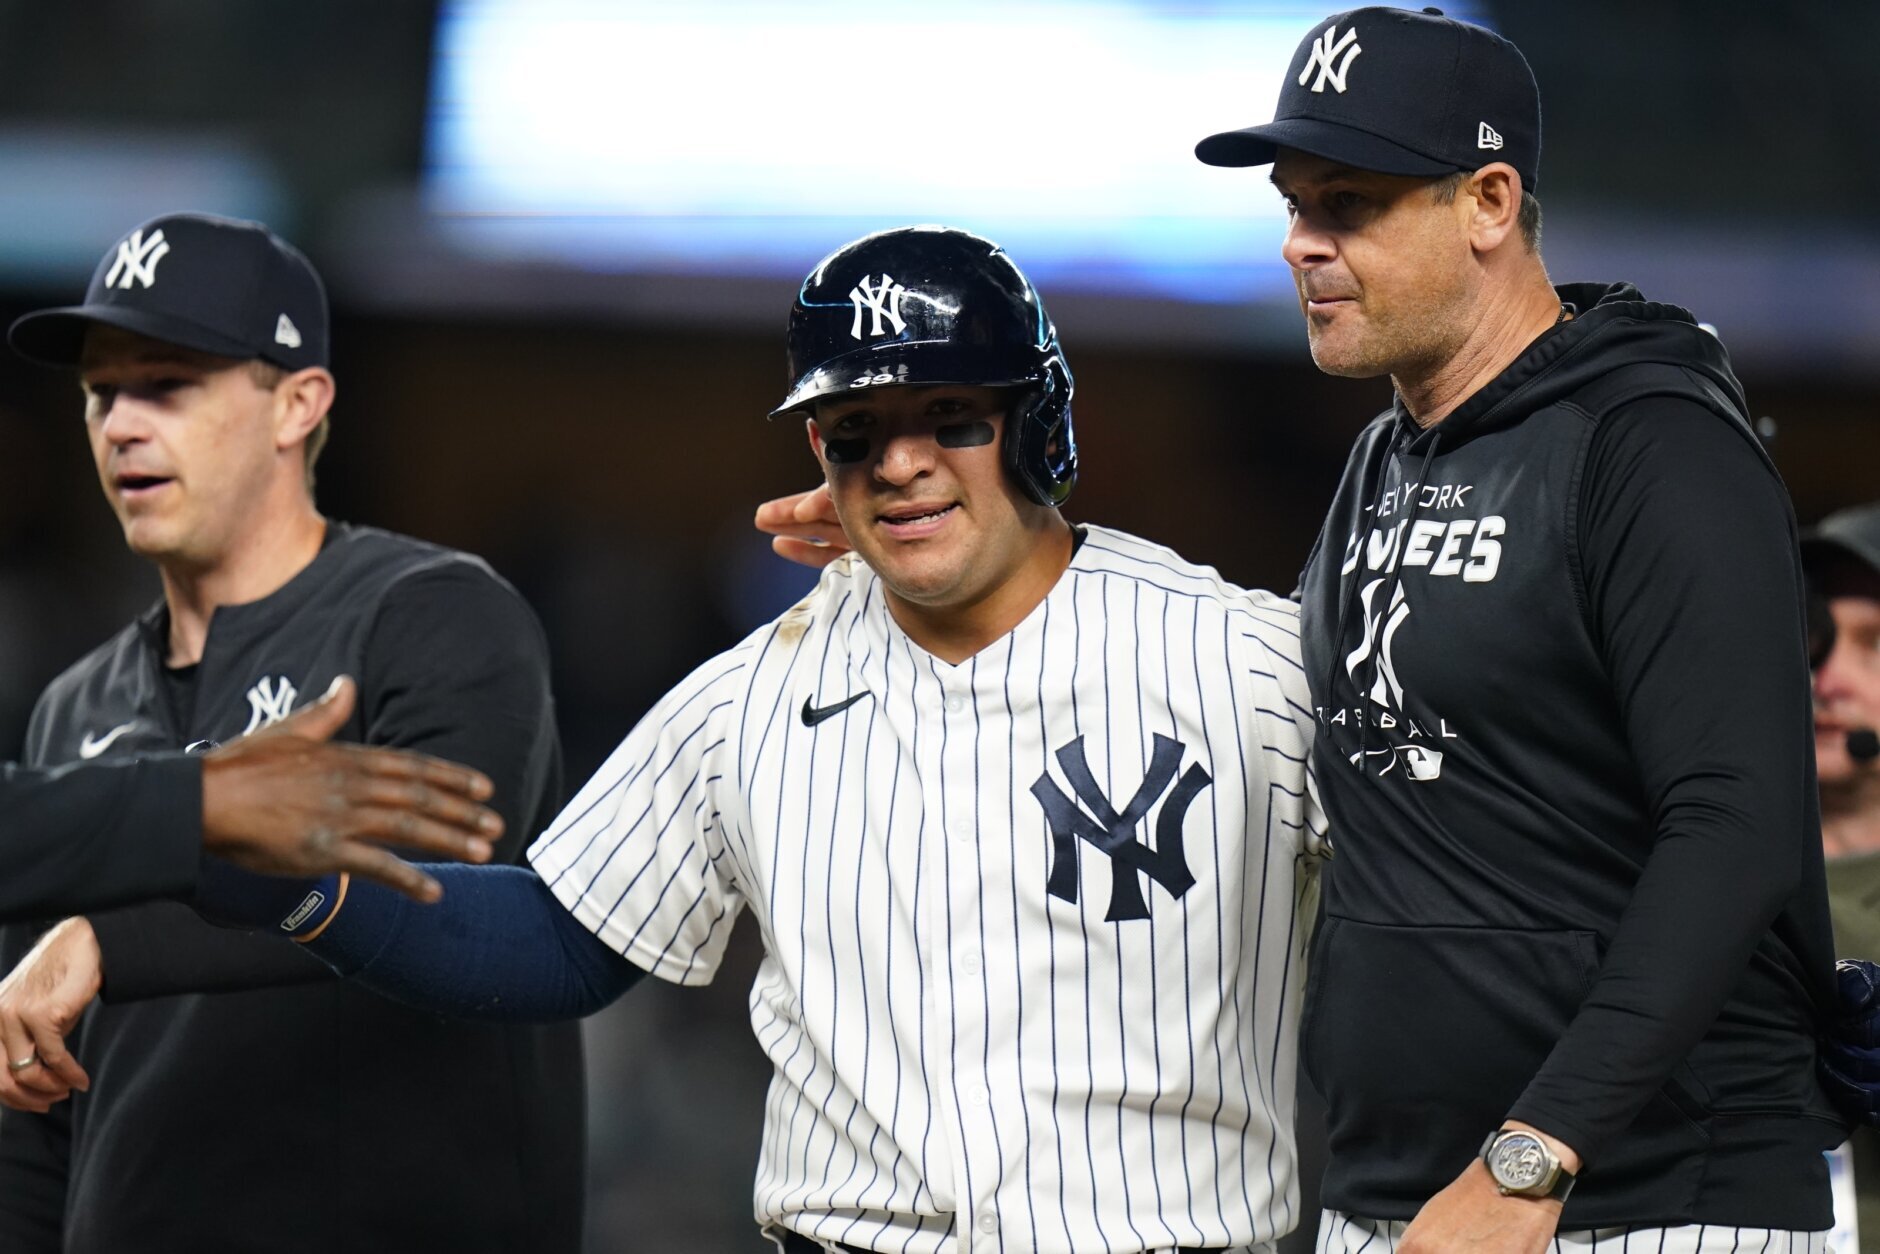 Yankees thin at catcher after Jose Trevino wrist injury